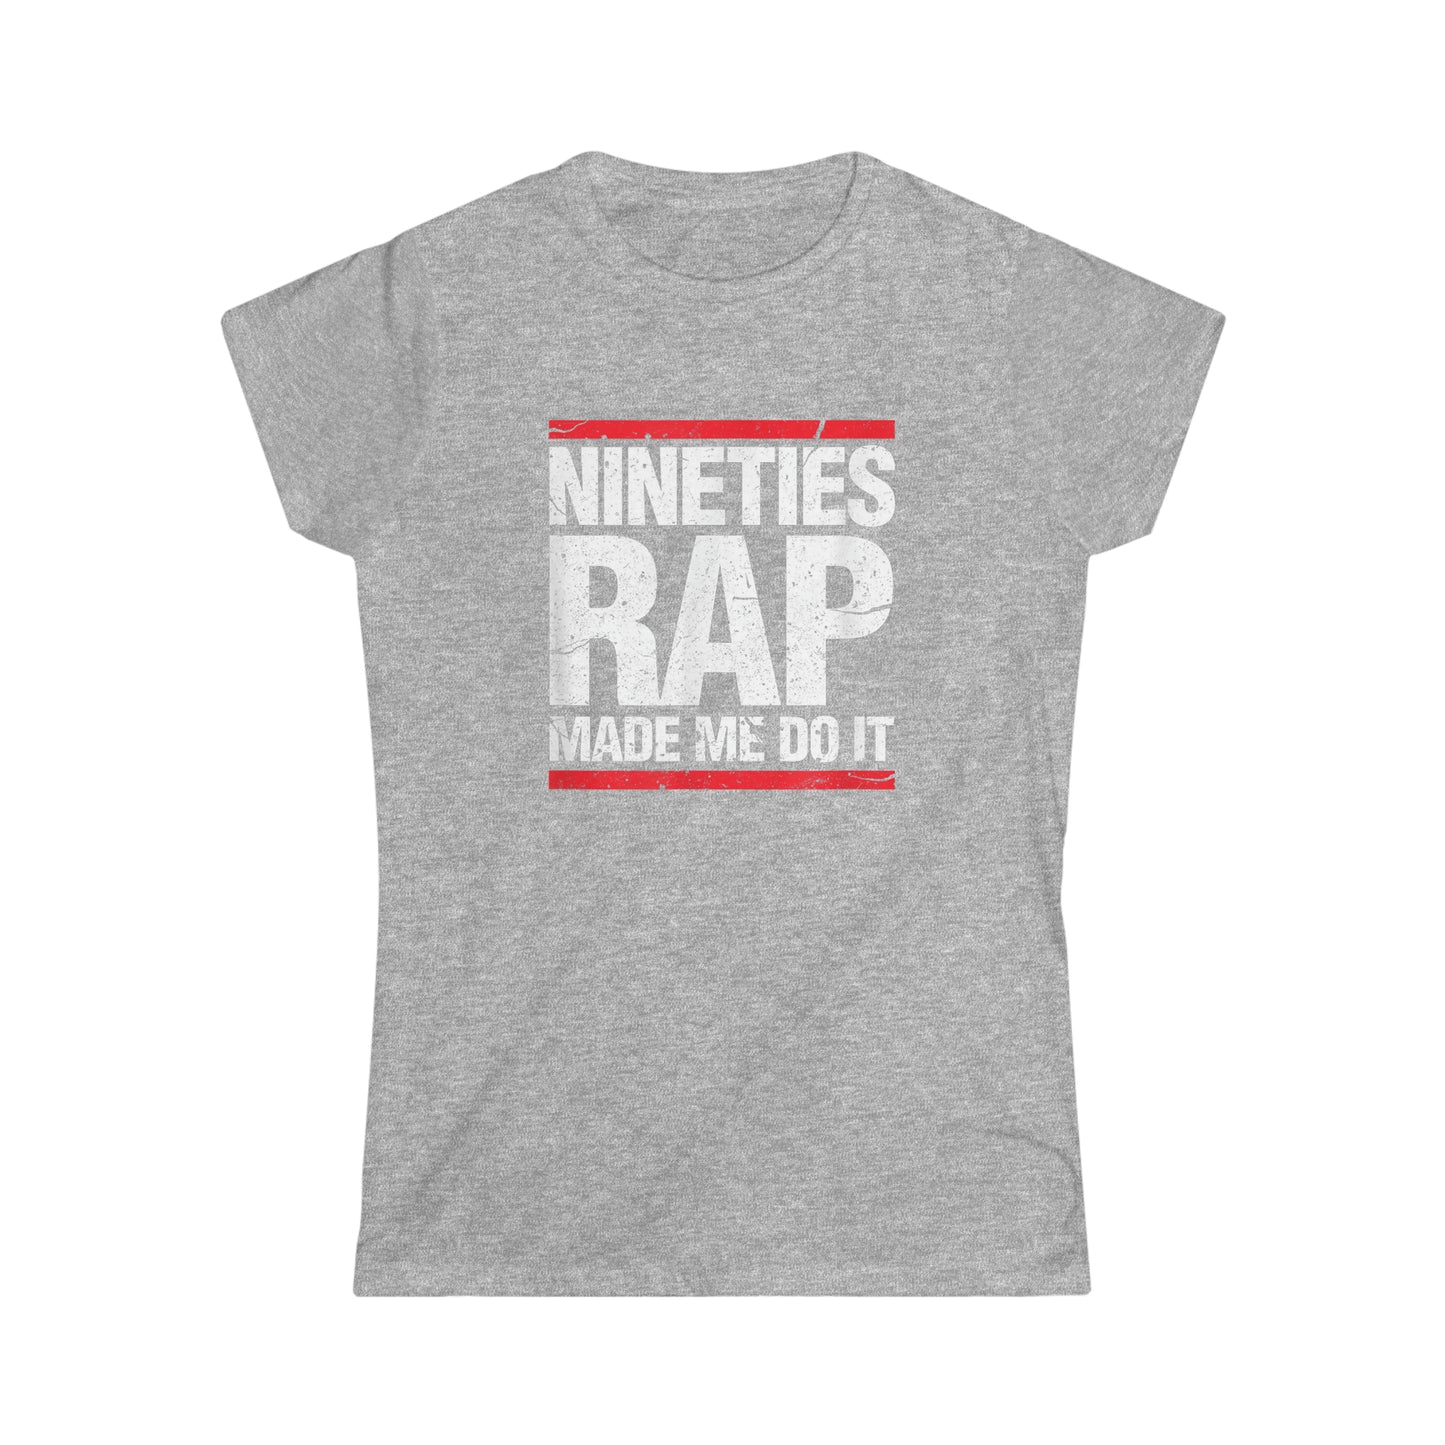 "Nineties Rap Made Me Do It" Women's Softstyle Tee